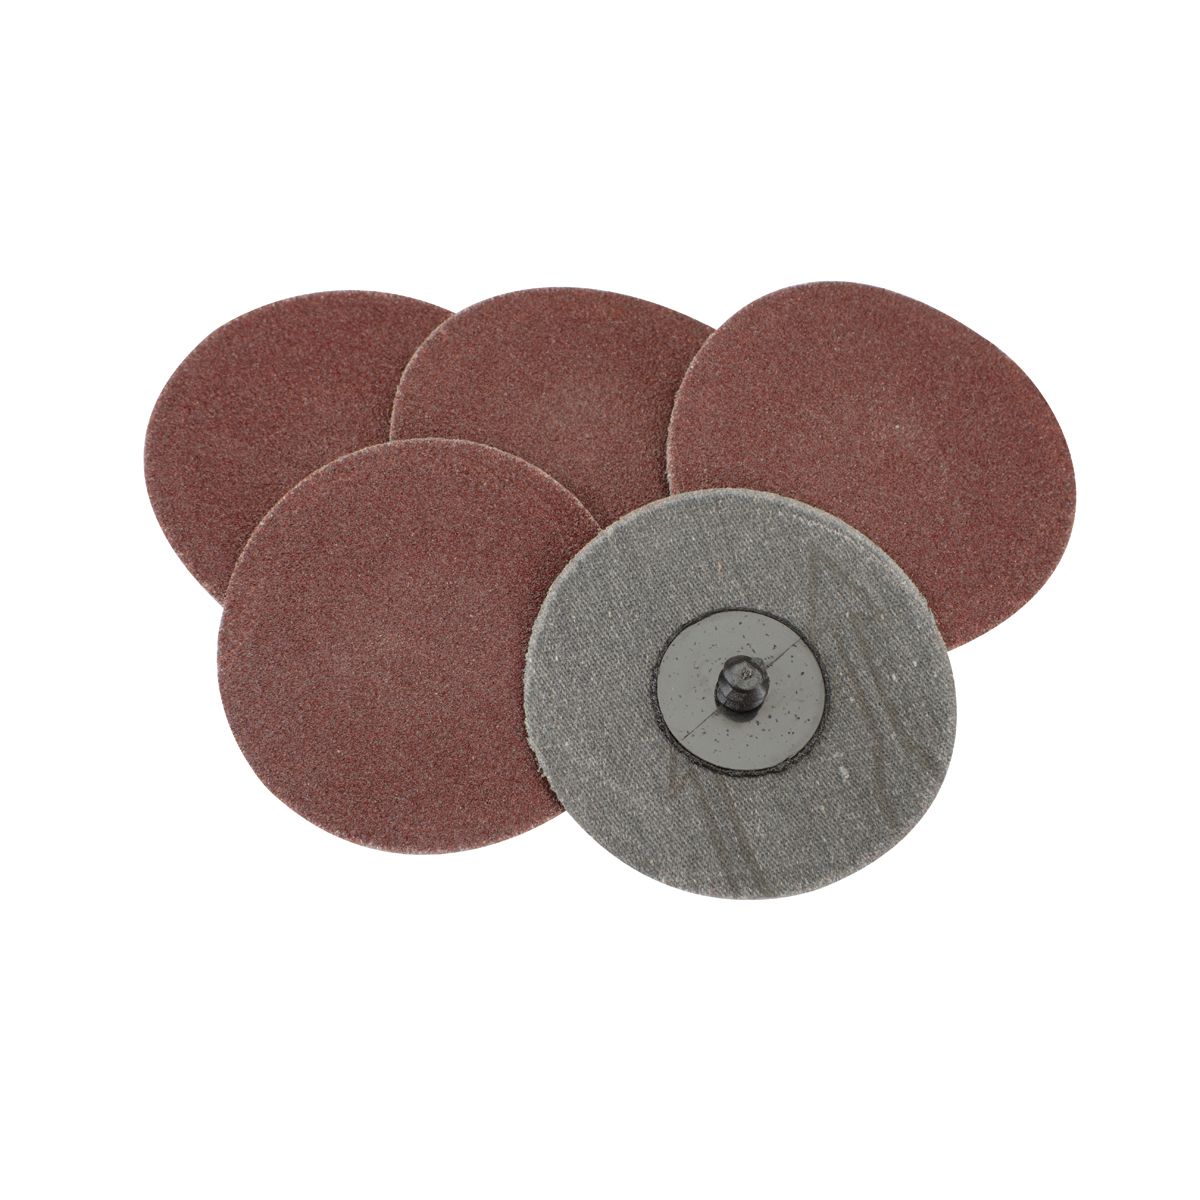 WARRIOR 3 in. 100 Grit Twist-Lock Abrasive Discs, 5 Pack